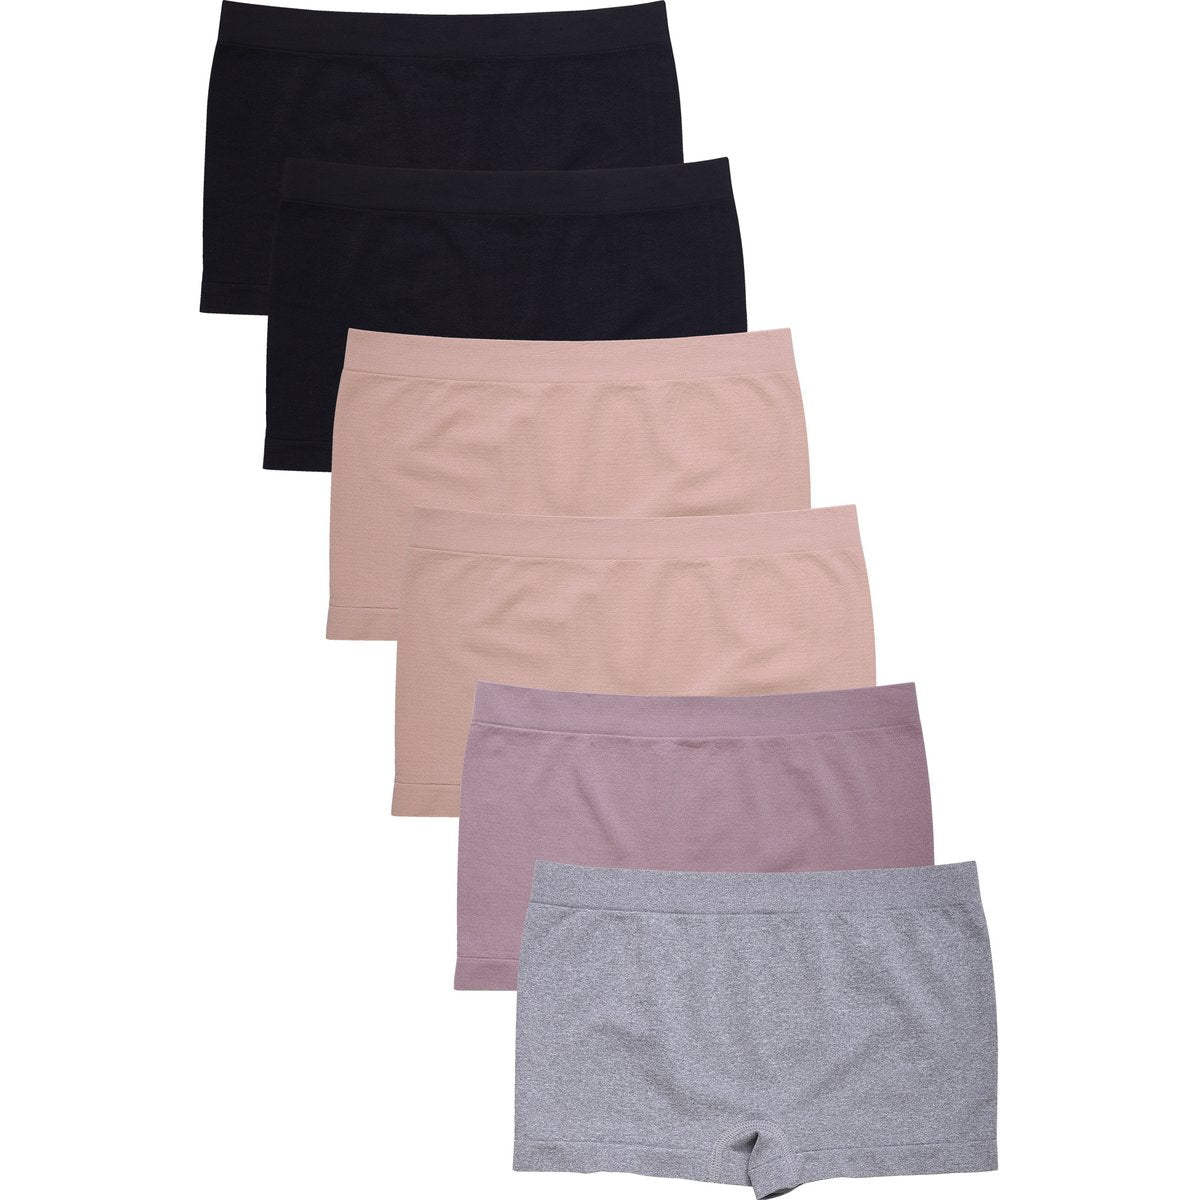 3 High Waist Seamless Boyshorts Panties Womens Underwear Boxer Briefs One  Size